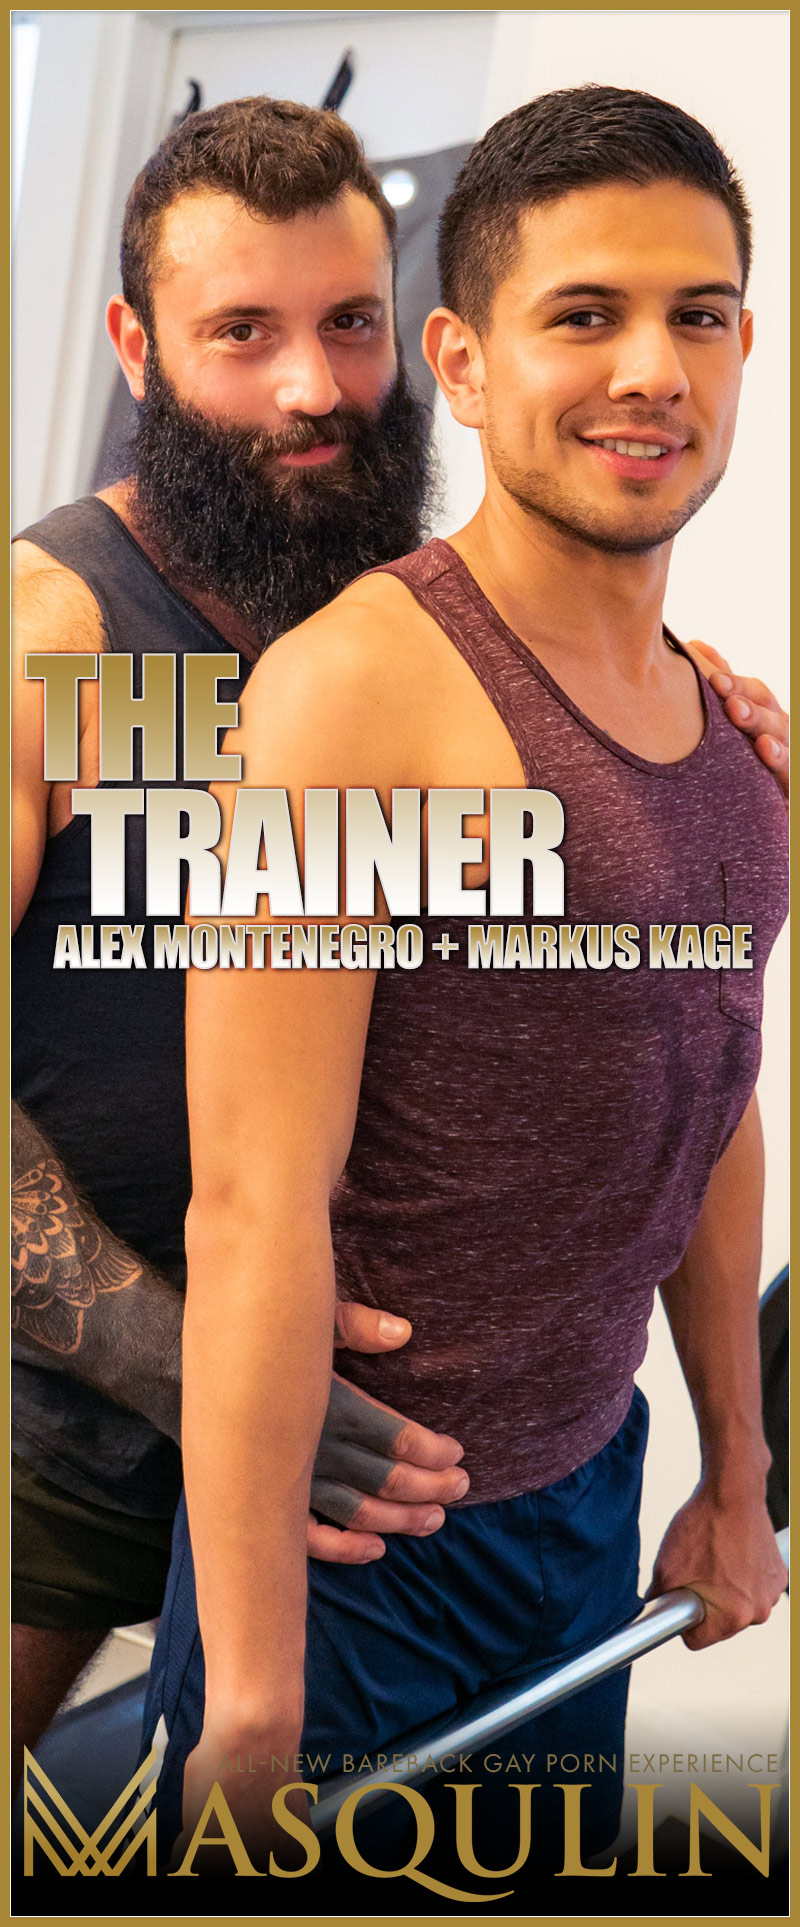 The Trainer, Part 3 (Alex Montenegro and Markus Kage) on Masqulin